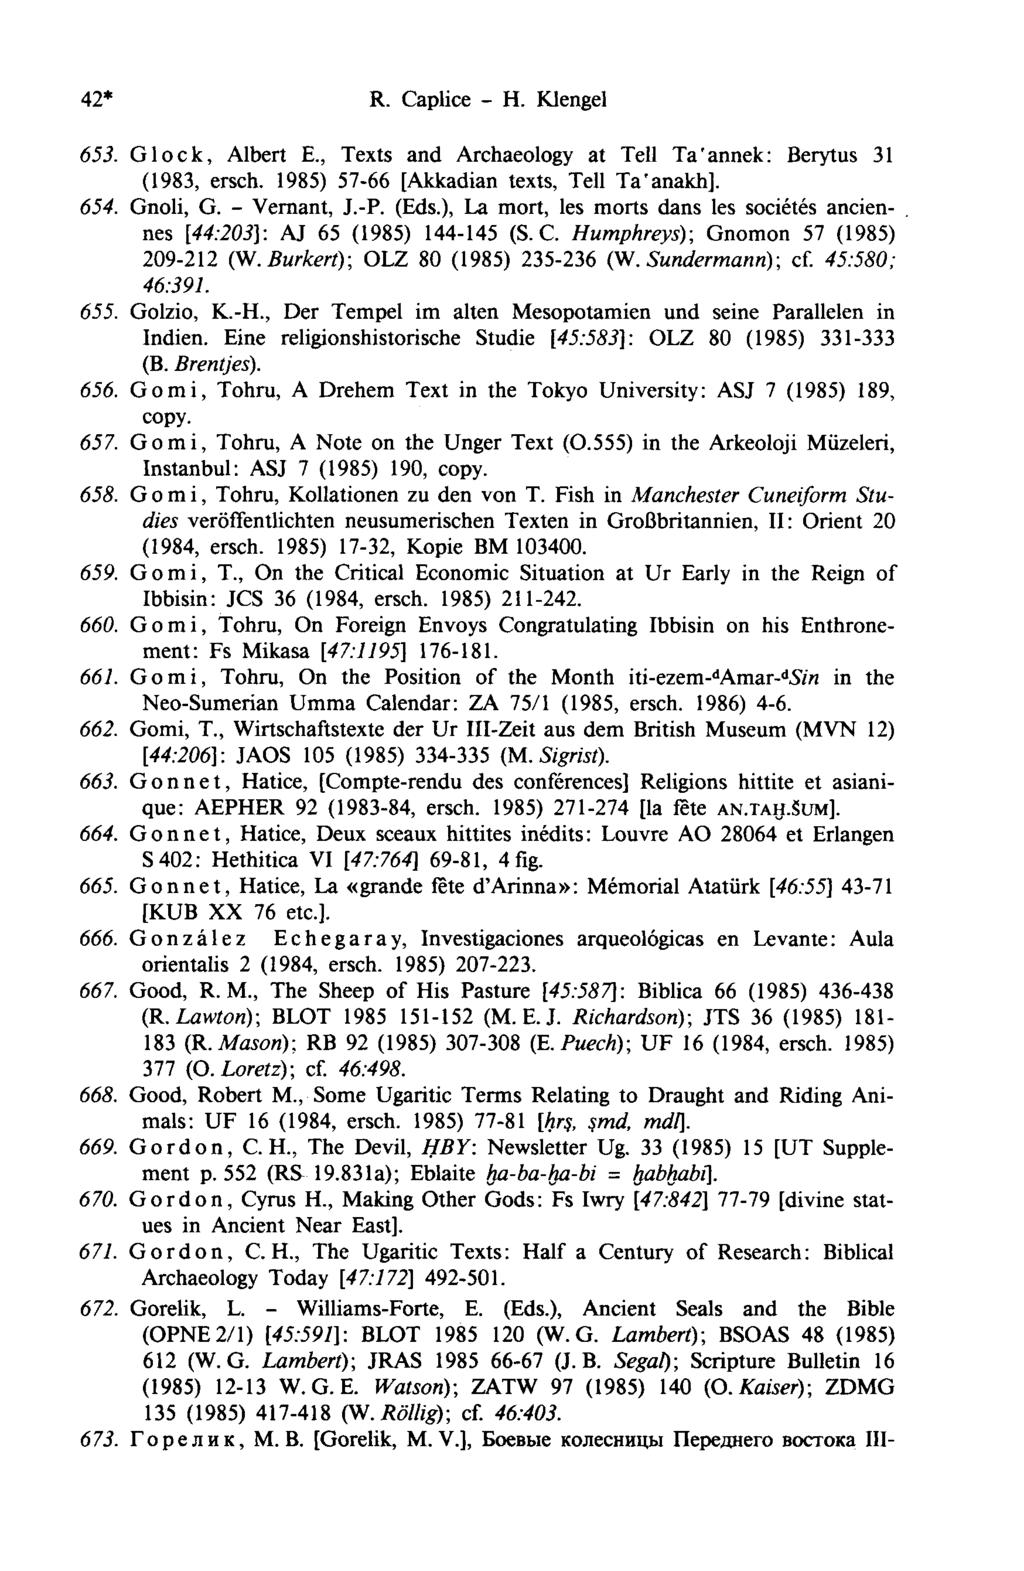 42* R. Caplice - H. Klengel 653. Glock, Albert E., Texts and Archaeology at Tell Ta'annek: Berytus 31 (1983, ersch. 1985) 57-66 [Akkadian texts, Tell Ta'anakh]. 654. Gnoli, G. - Vernant, J.-P. (Eds.